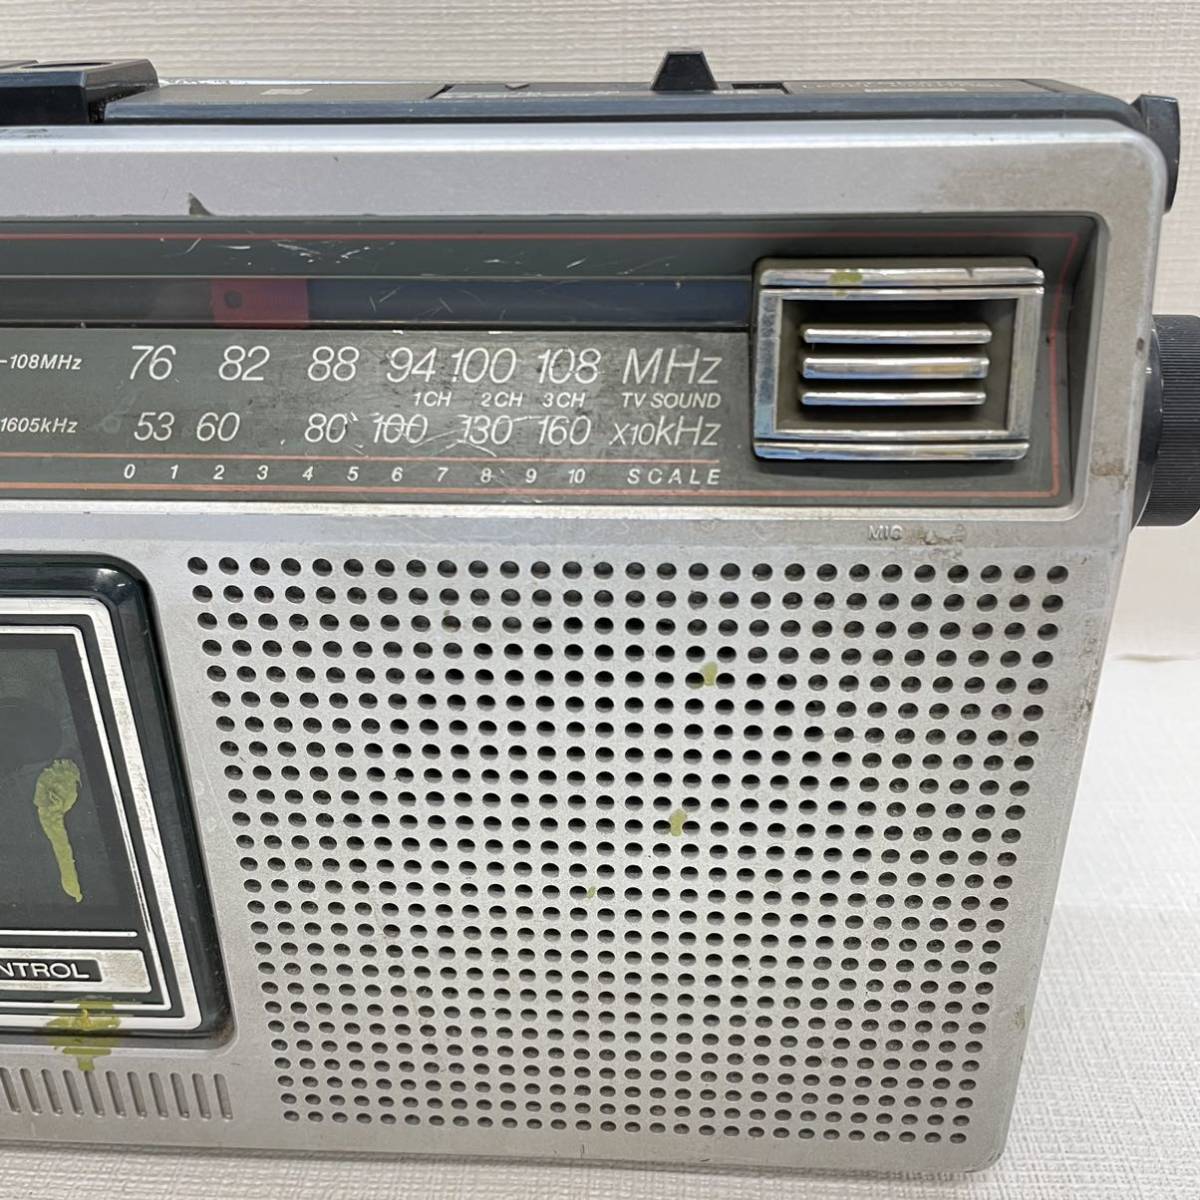 B5)National FM /AM radio cassette recorder RX-1230 present condition goods (16)